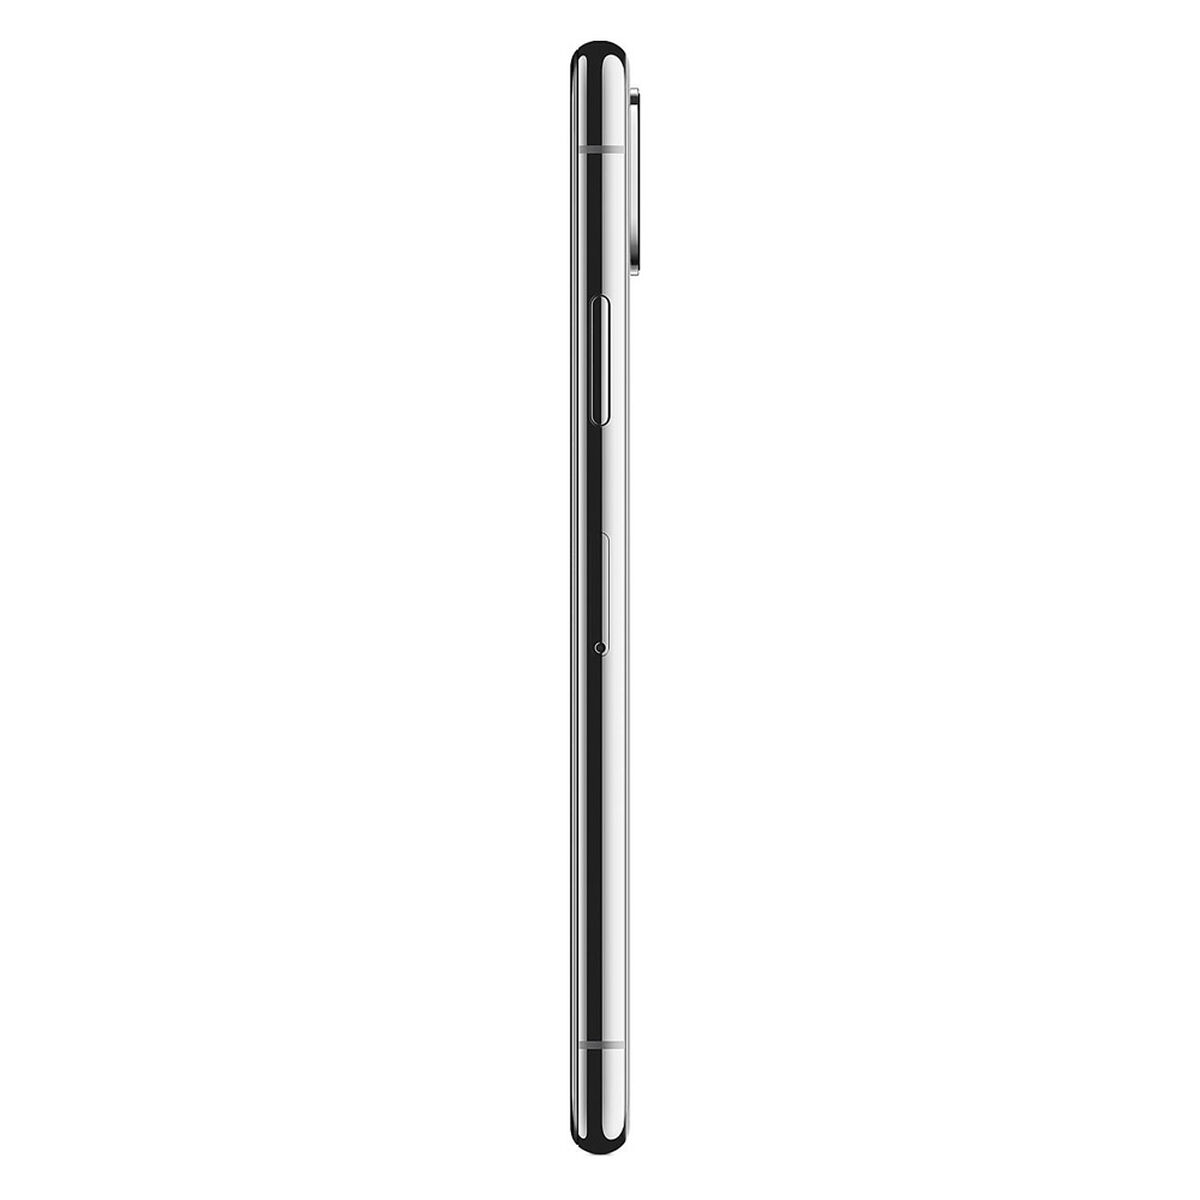 Celular Apple Iphone X 64GB 5.8" Reacondicionado Plata Liberado